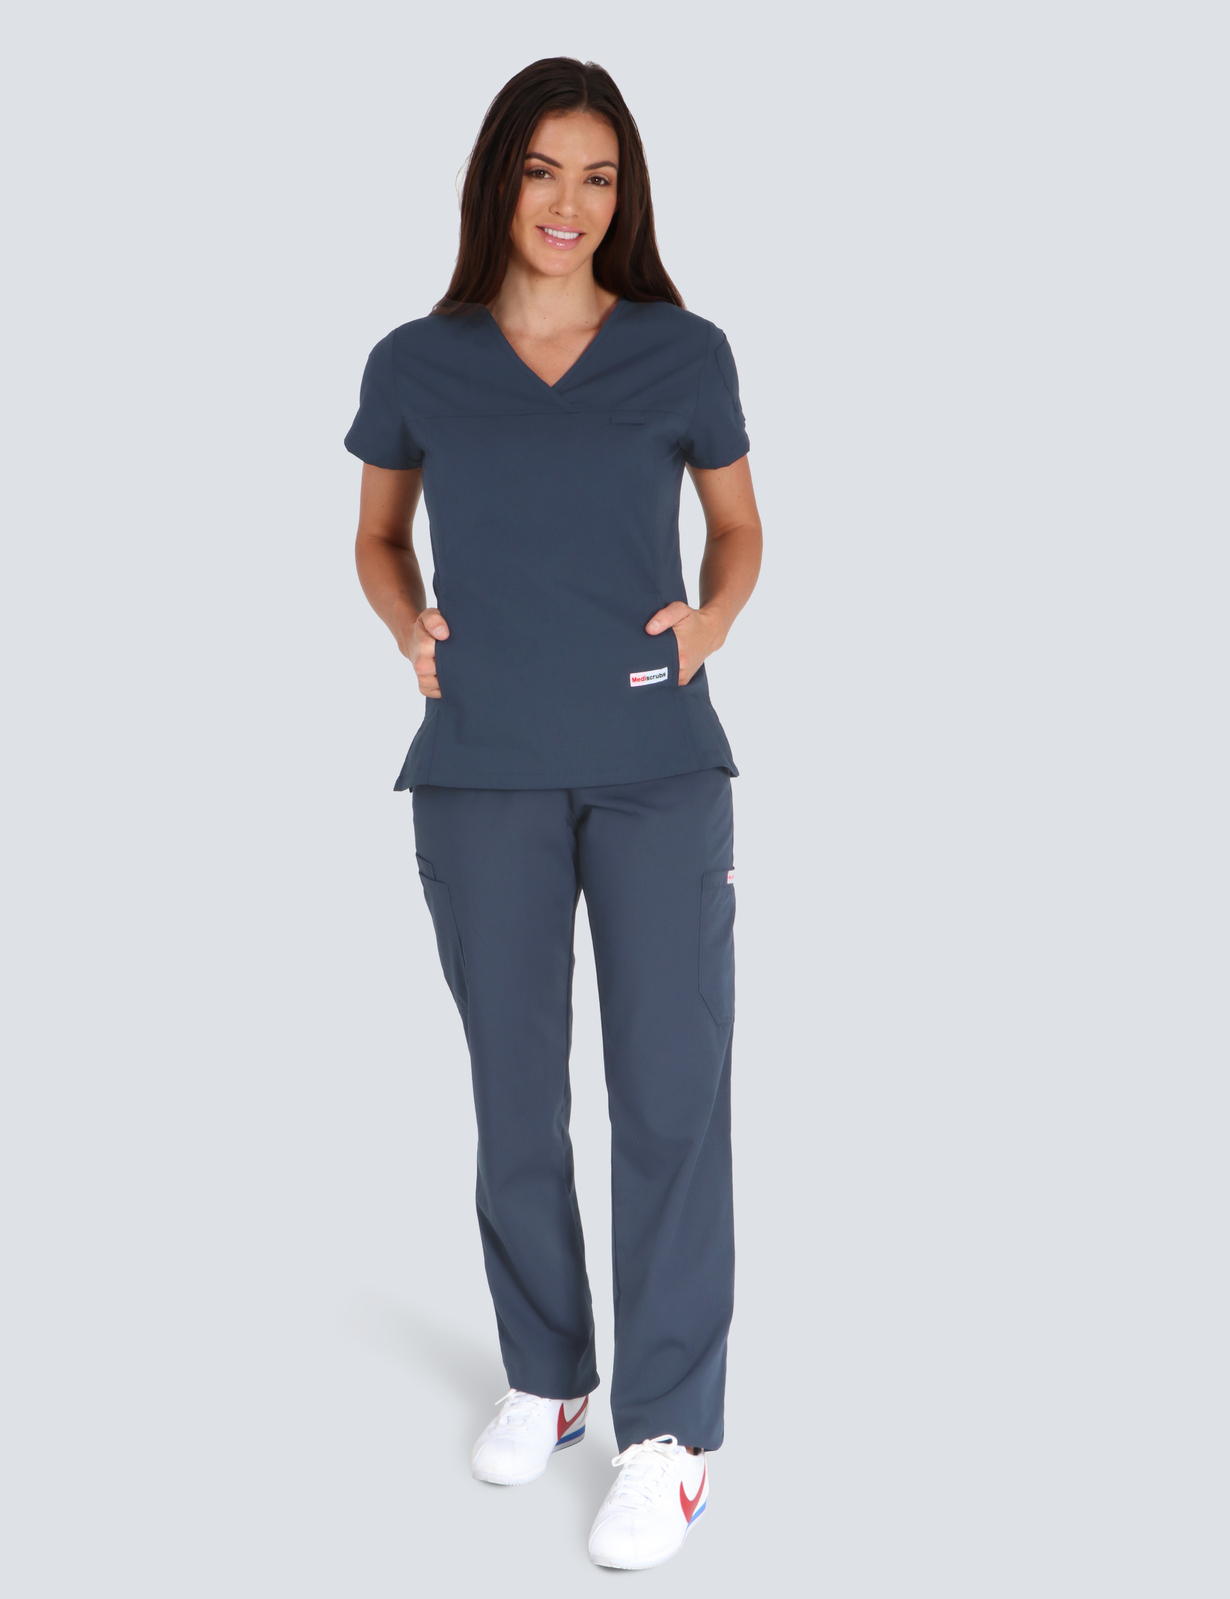 St Vincent's Hospital Emergency Department  Nurse Practitioner Candidate Uniform Set Bundle (Women's Fit Solid and Regular Pants in Navy incl logos)